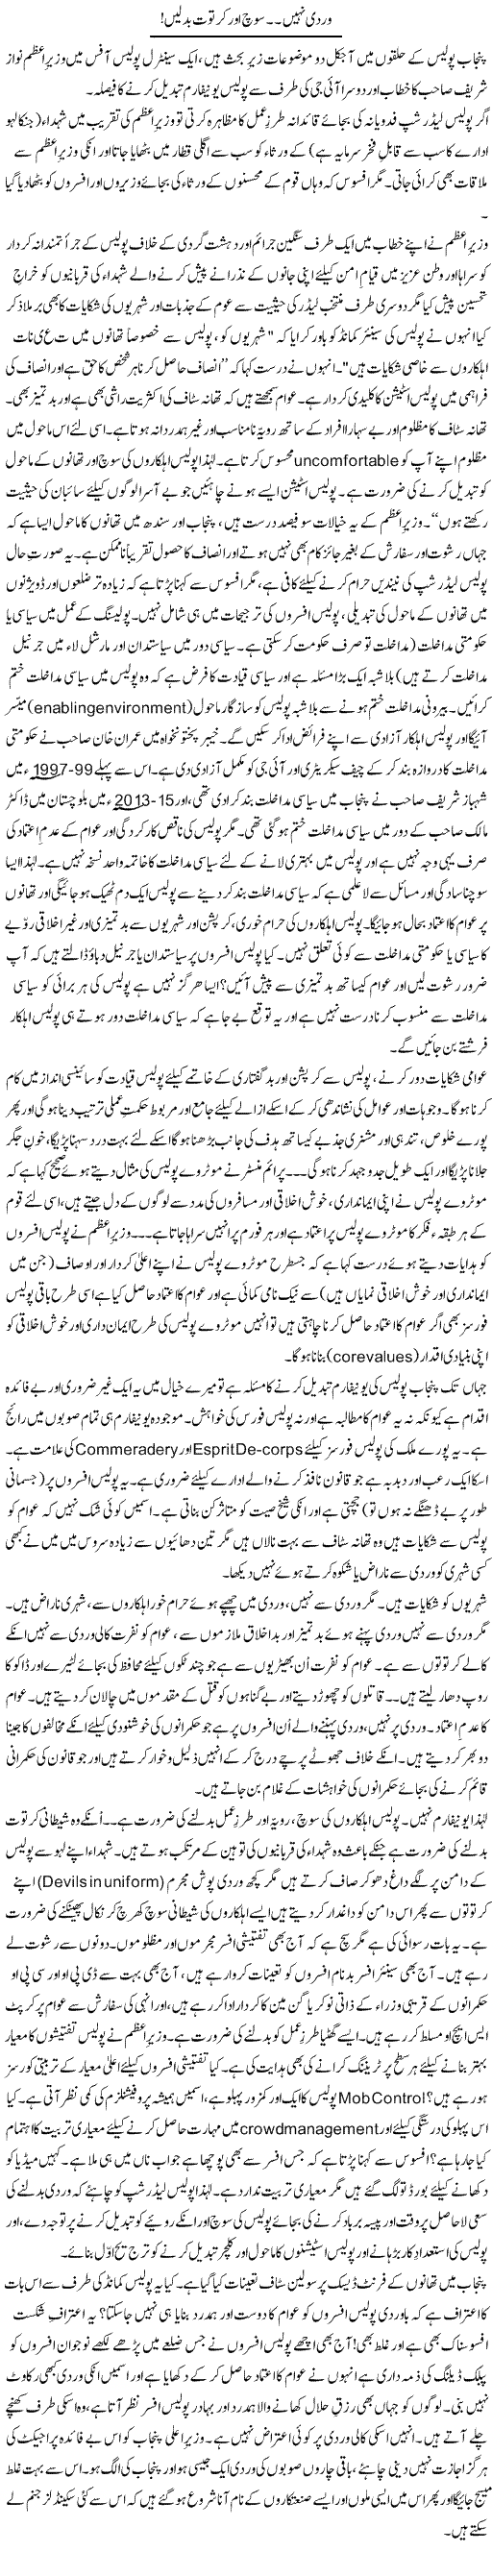 Wardi Nahi, Soch Aur Kartoot Badlen | Zulfiqar Ahmed Cheema | Daily Urdu Columns